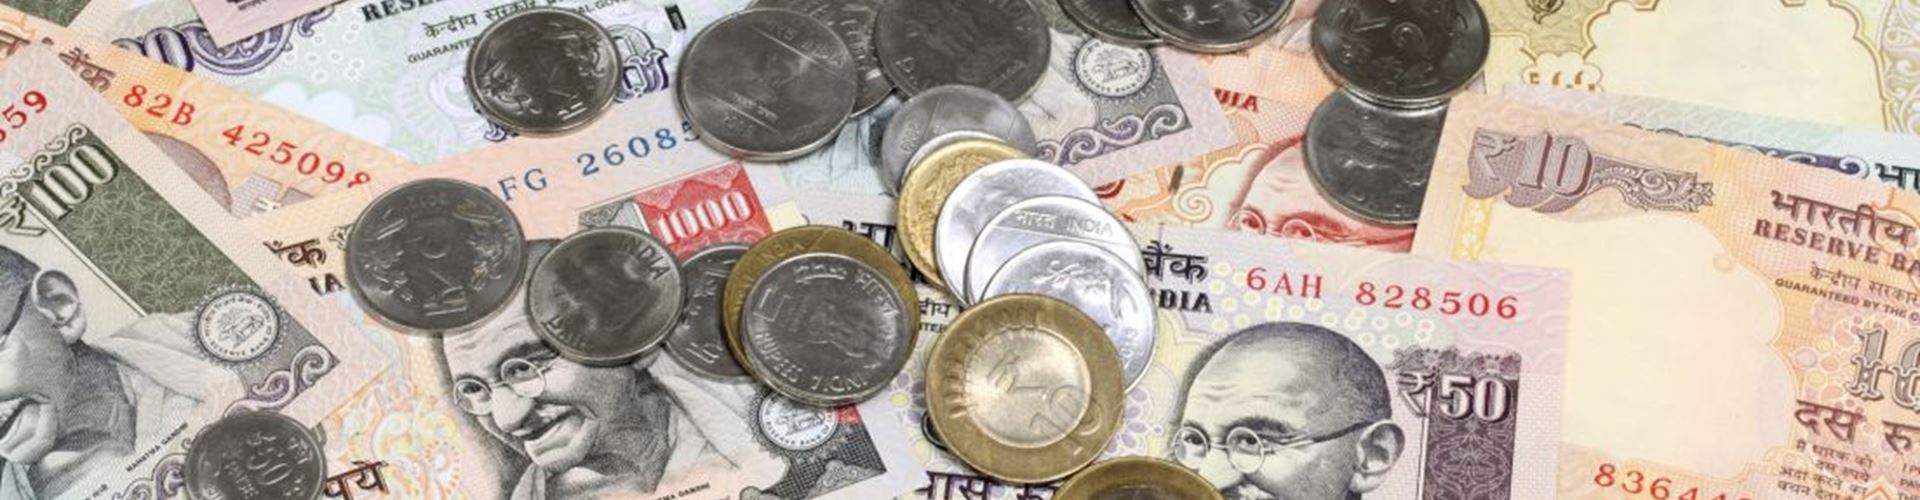 London Stock Exchange issues biggest ever rupee bond